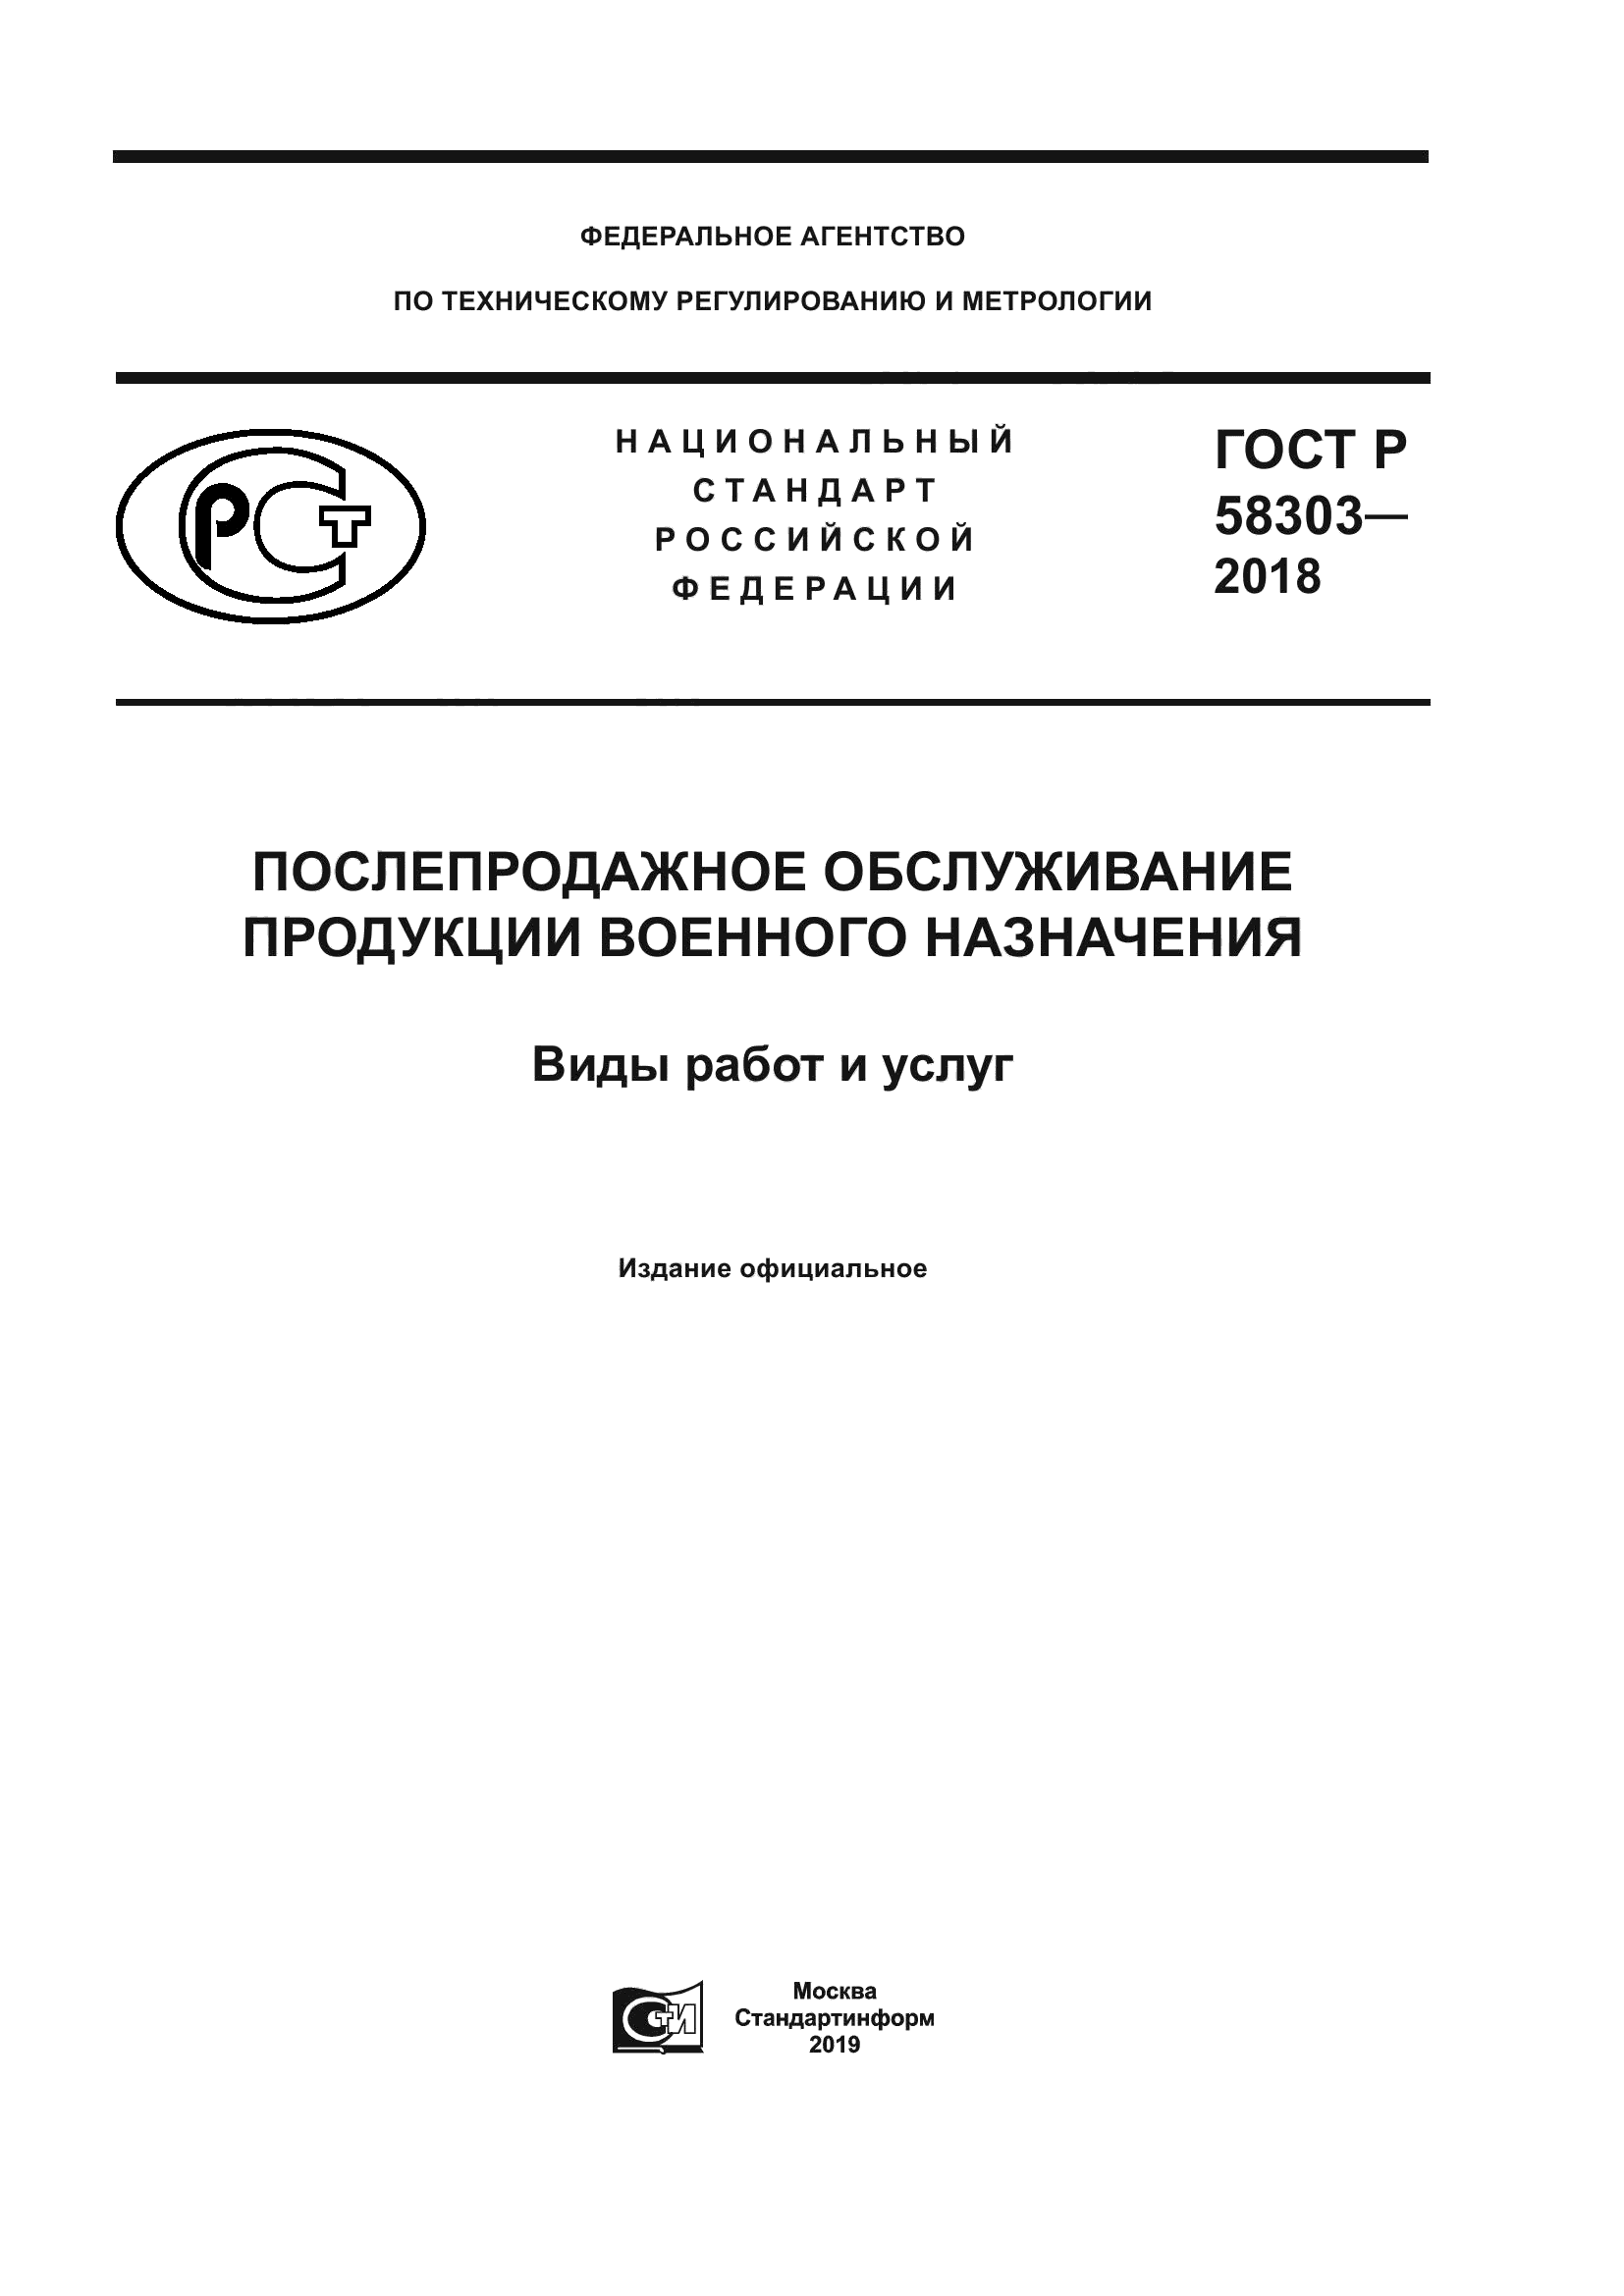 ГОСТ Р 58303-2018